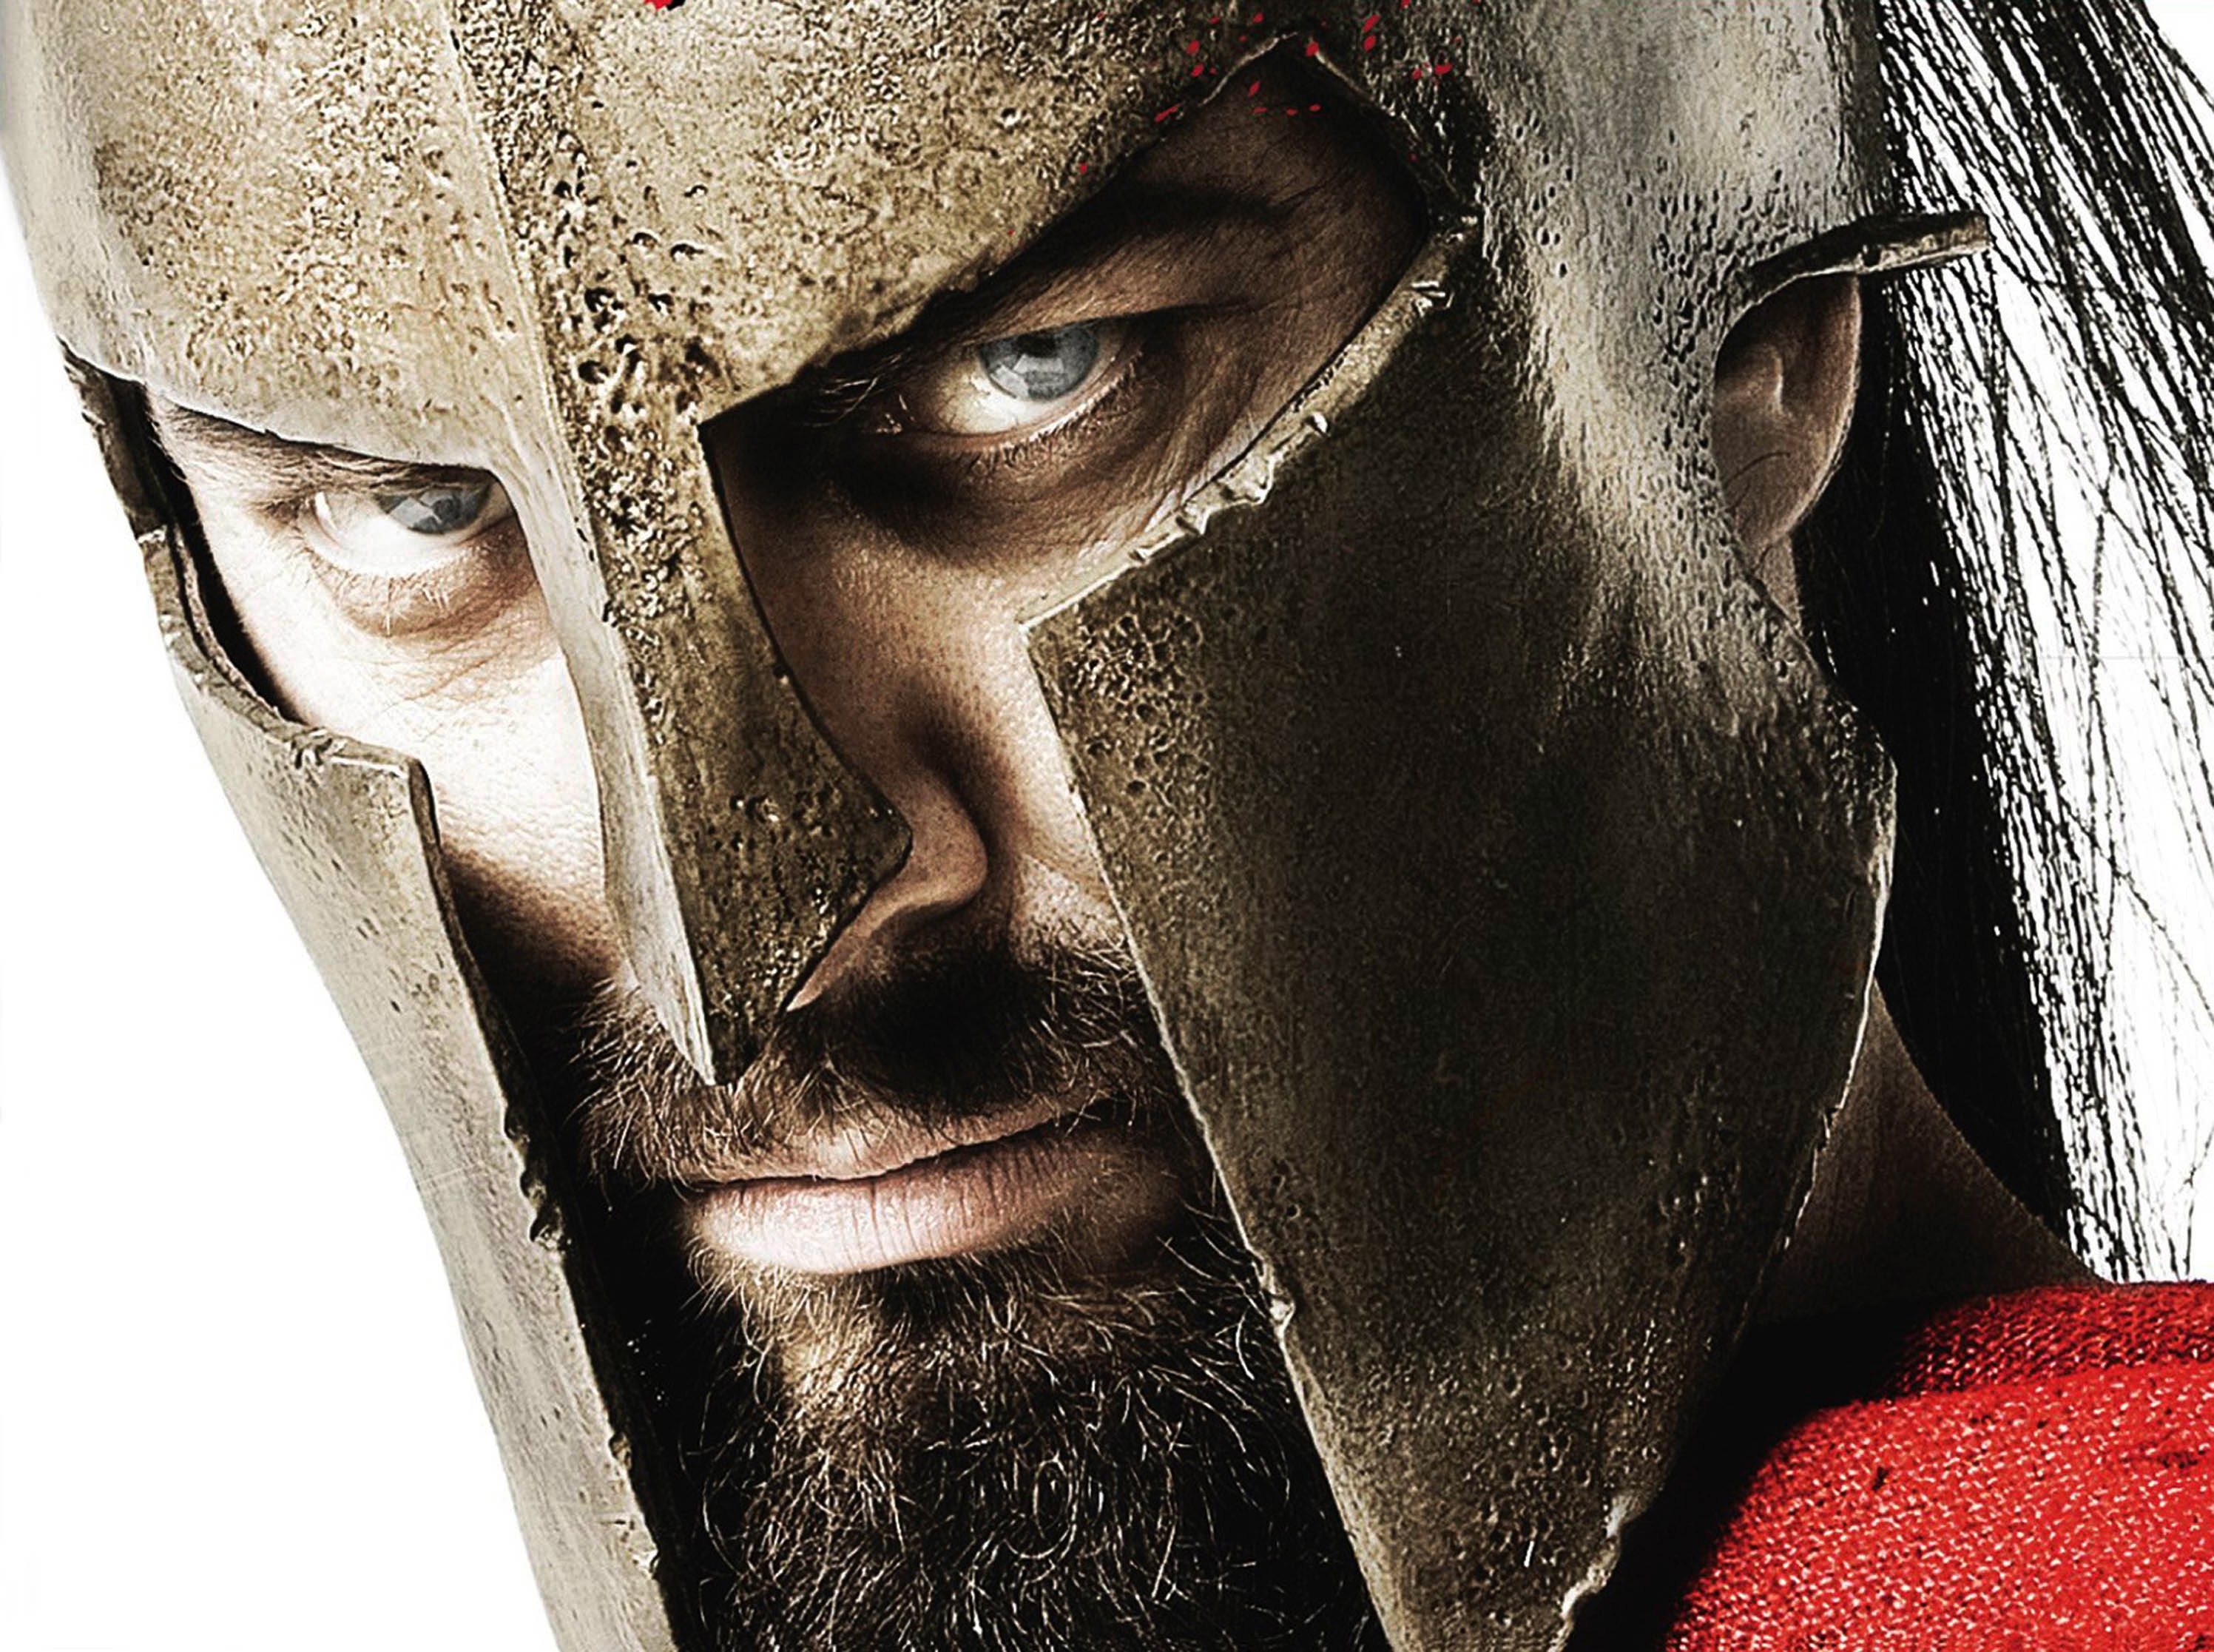 This is Sparta! King Leonidas receives the Persian envoy. 300 